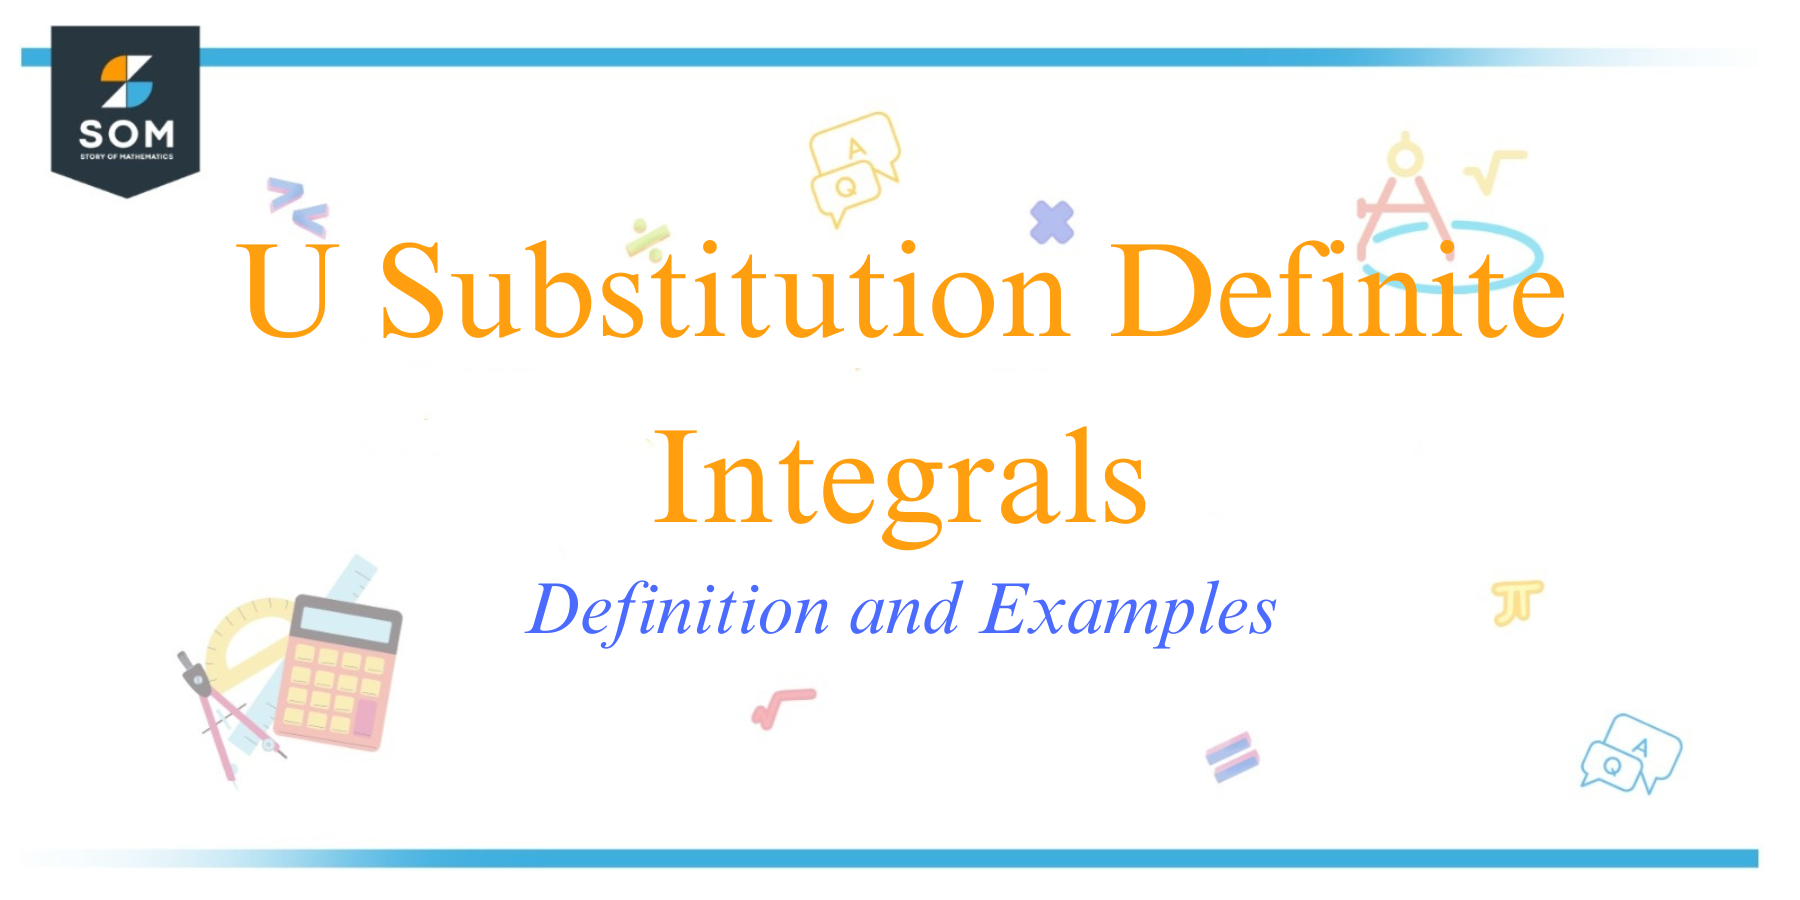 U Substitution Definite Integrals Definition and